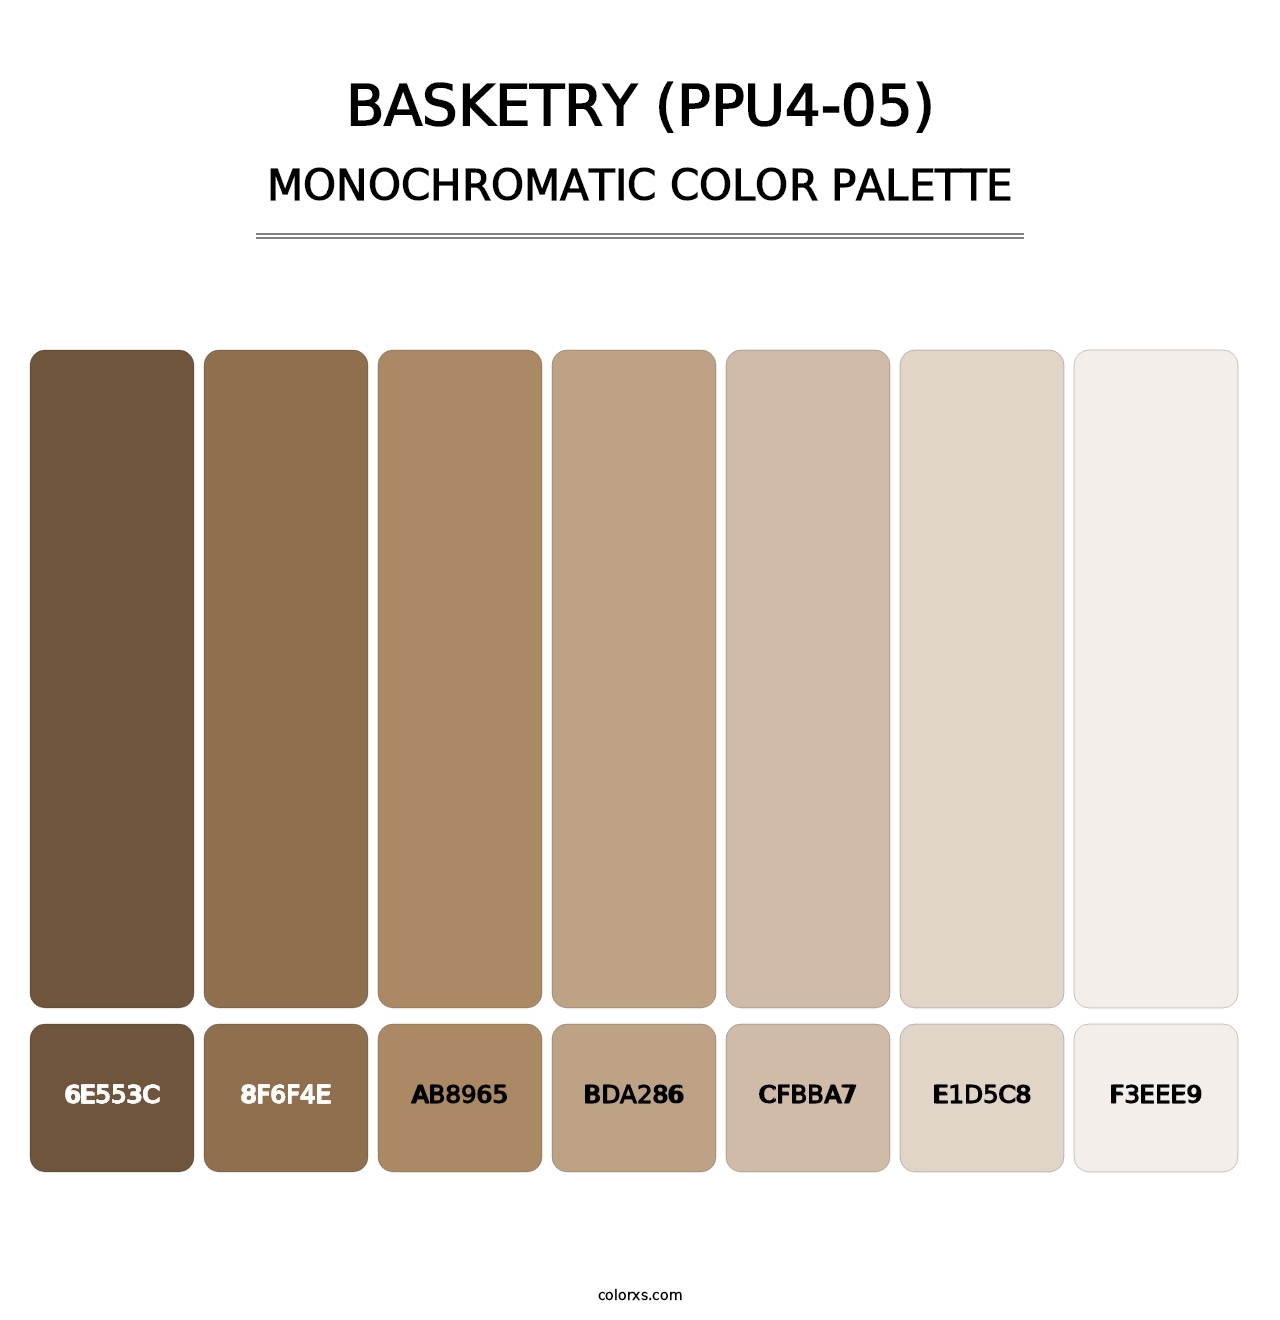 Basketry (PPU4-05) - Monochromatic Color Palette